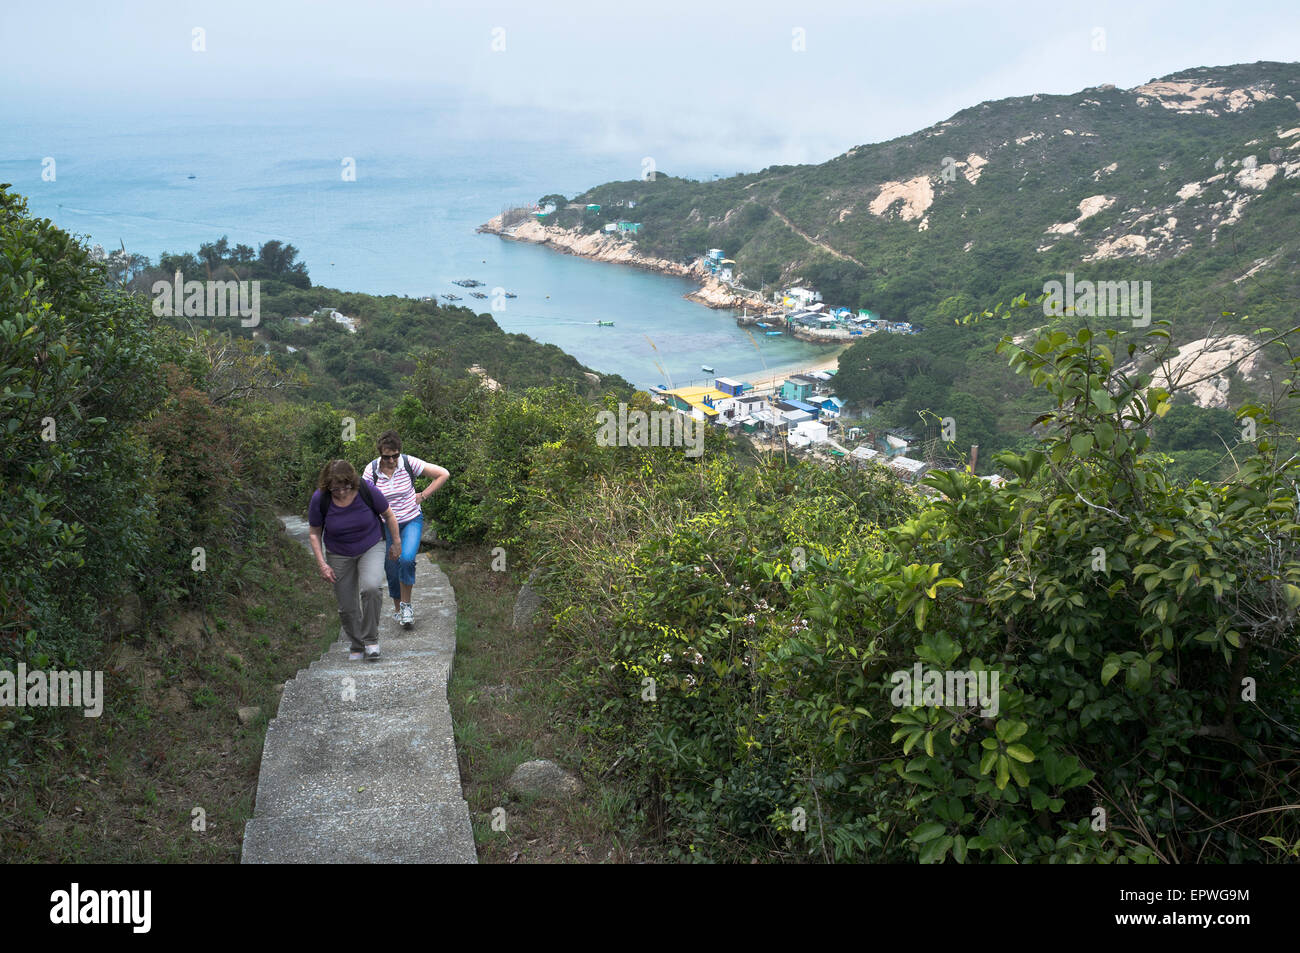 dh Footpath PO TOI HONG KONG Tourist women hikers walking path Po Toi island Hong Kong walk Stock Photo